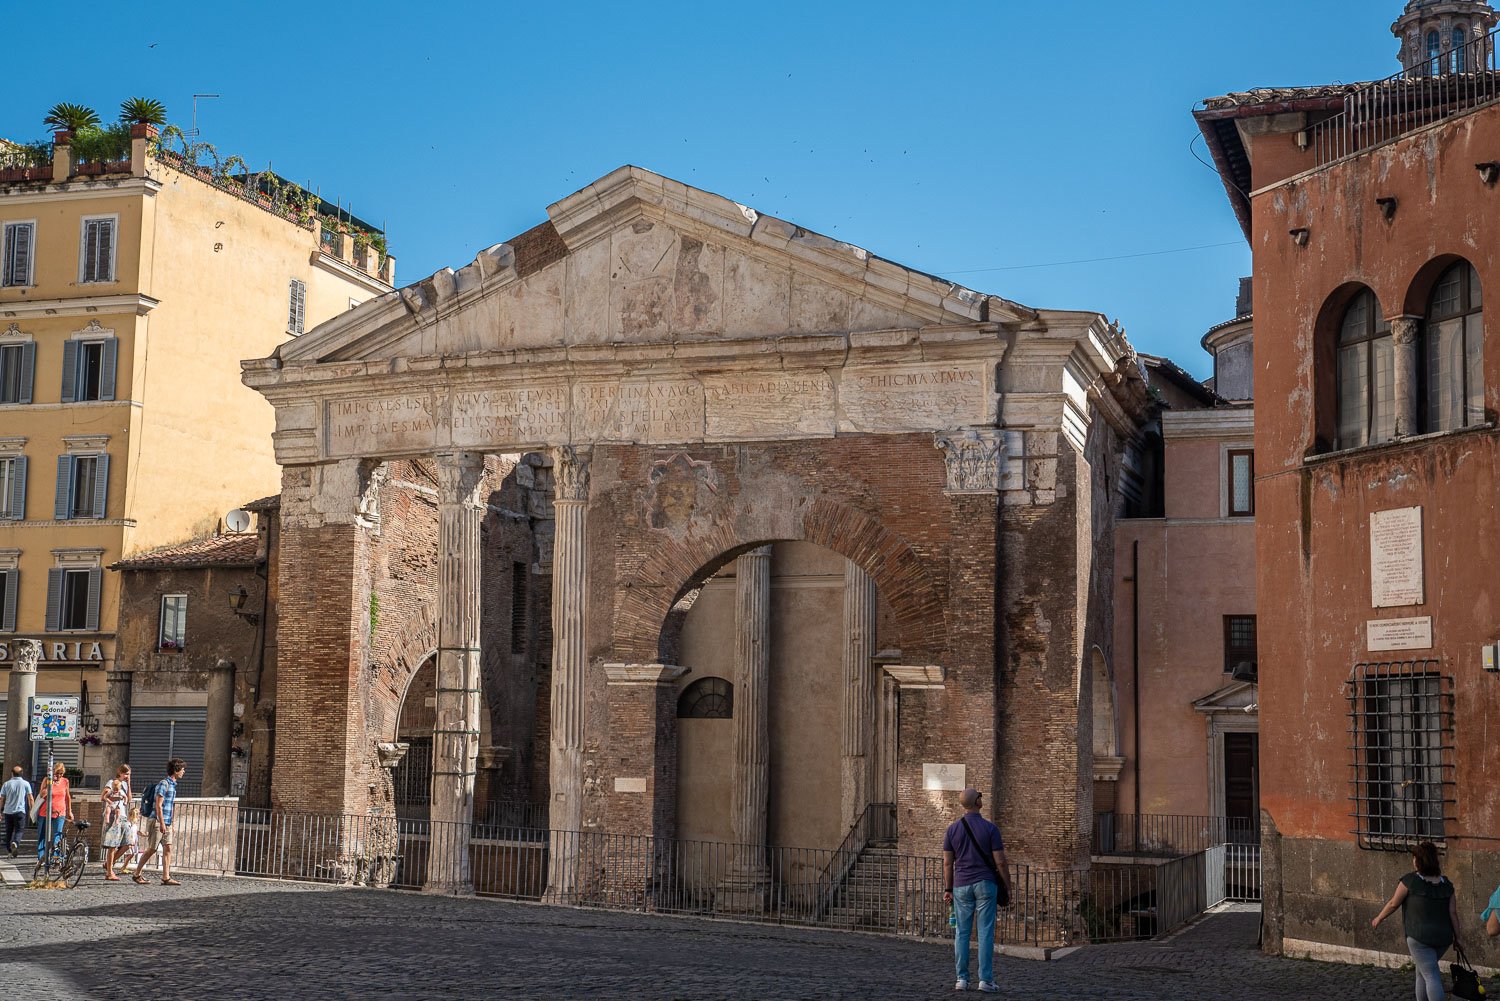 Rome's Jewish Quarter - Pescheria Vecchia